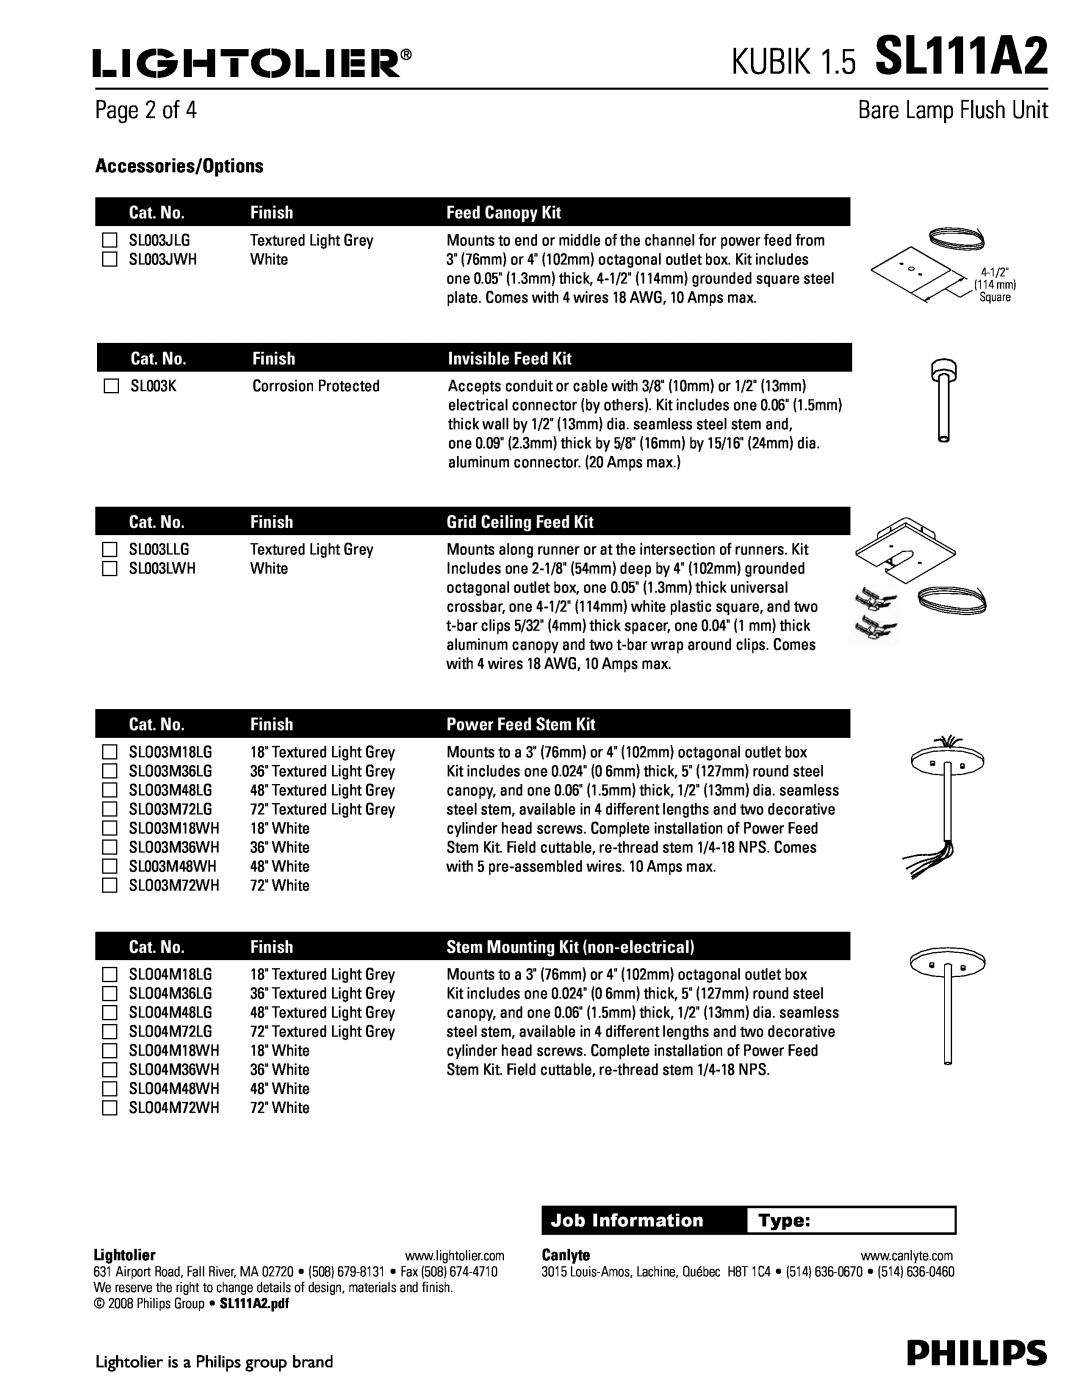 Lightolier dimensions Page 2 of, Accessories/Options, Type, KUBIK 1.5 SL111A2, Bare Lamp Flush Unit 